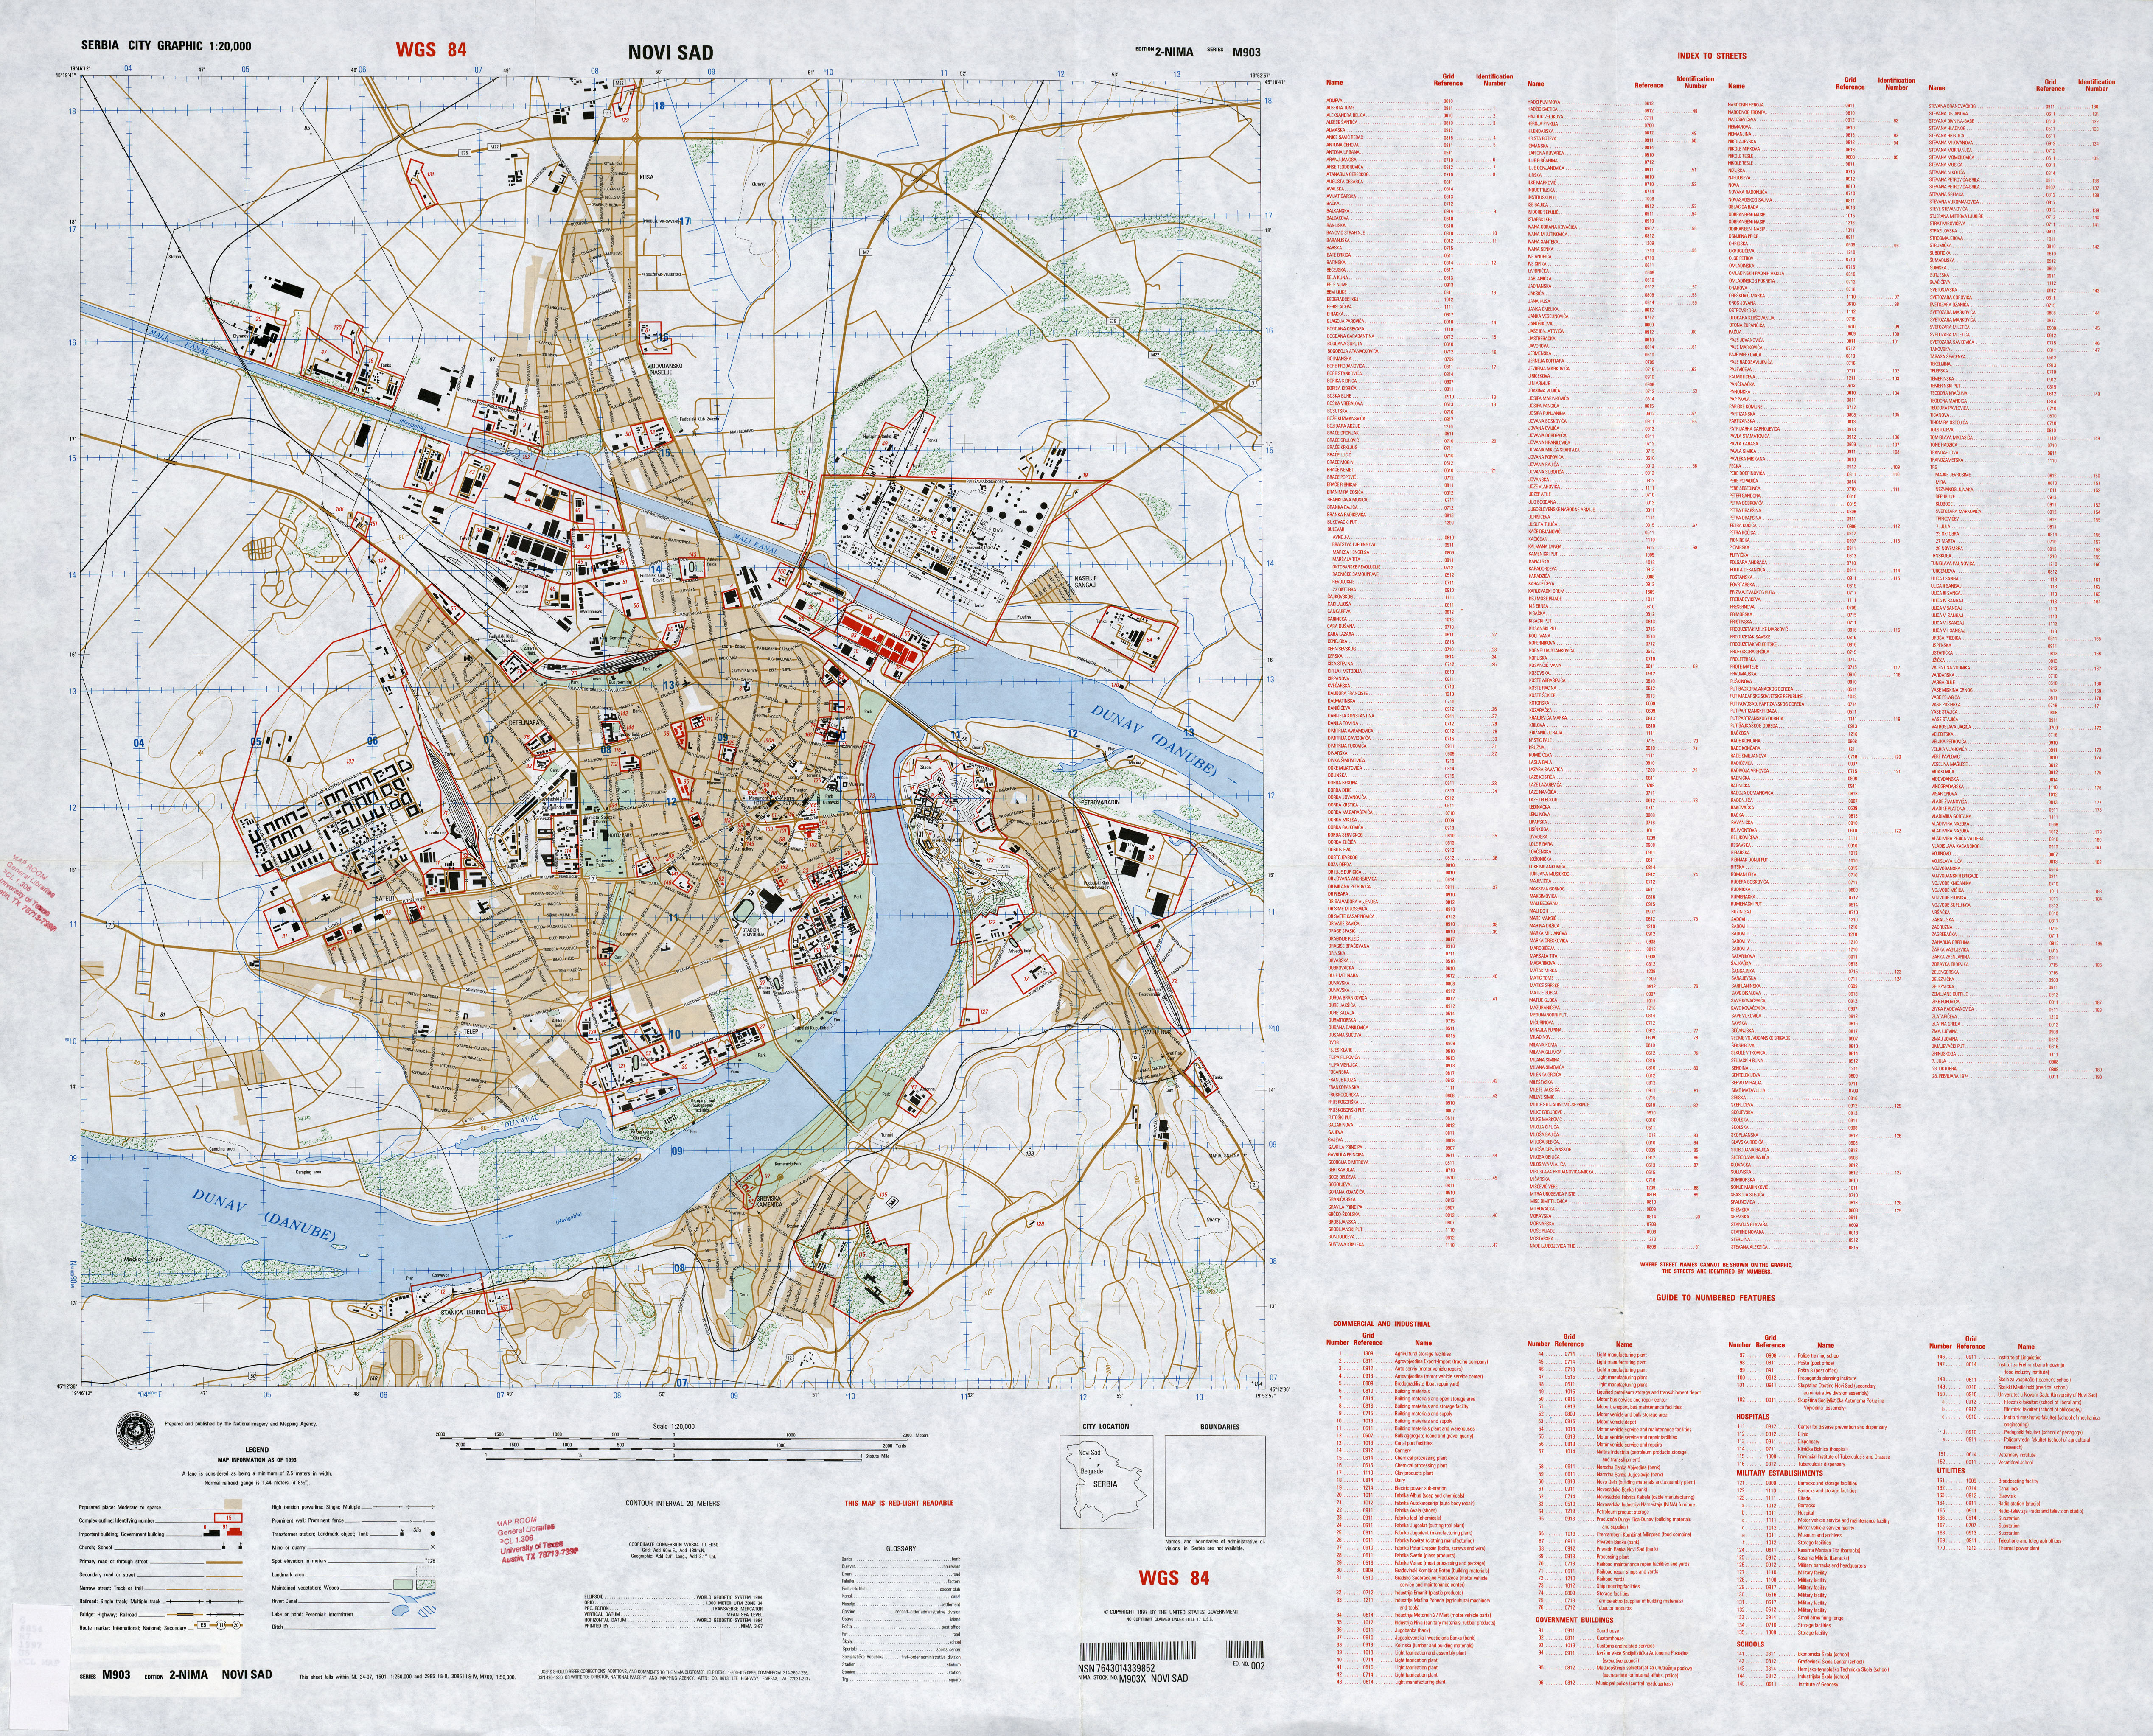 mapa ulica novog sada U.S. National Imagery and Mapping Agency (Author), published by  mapa ulica novog sada